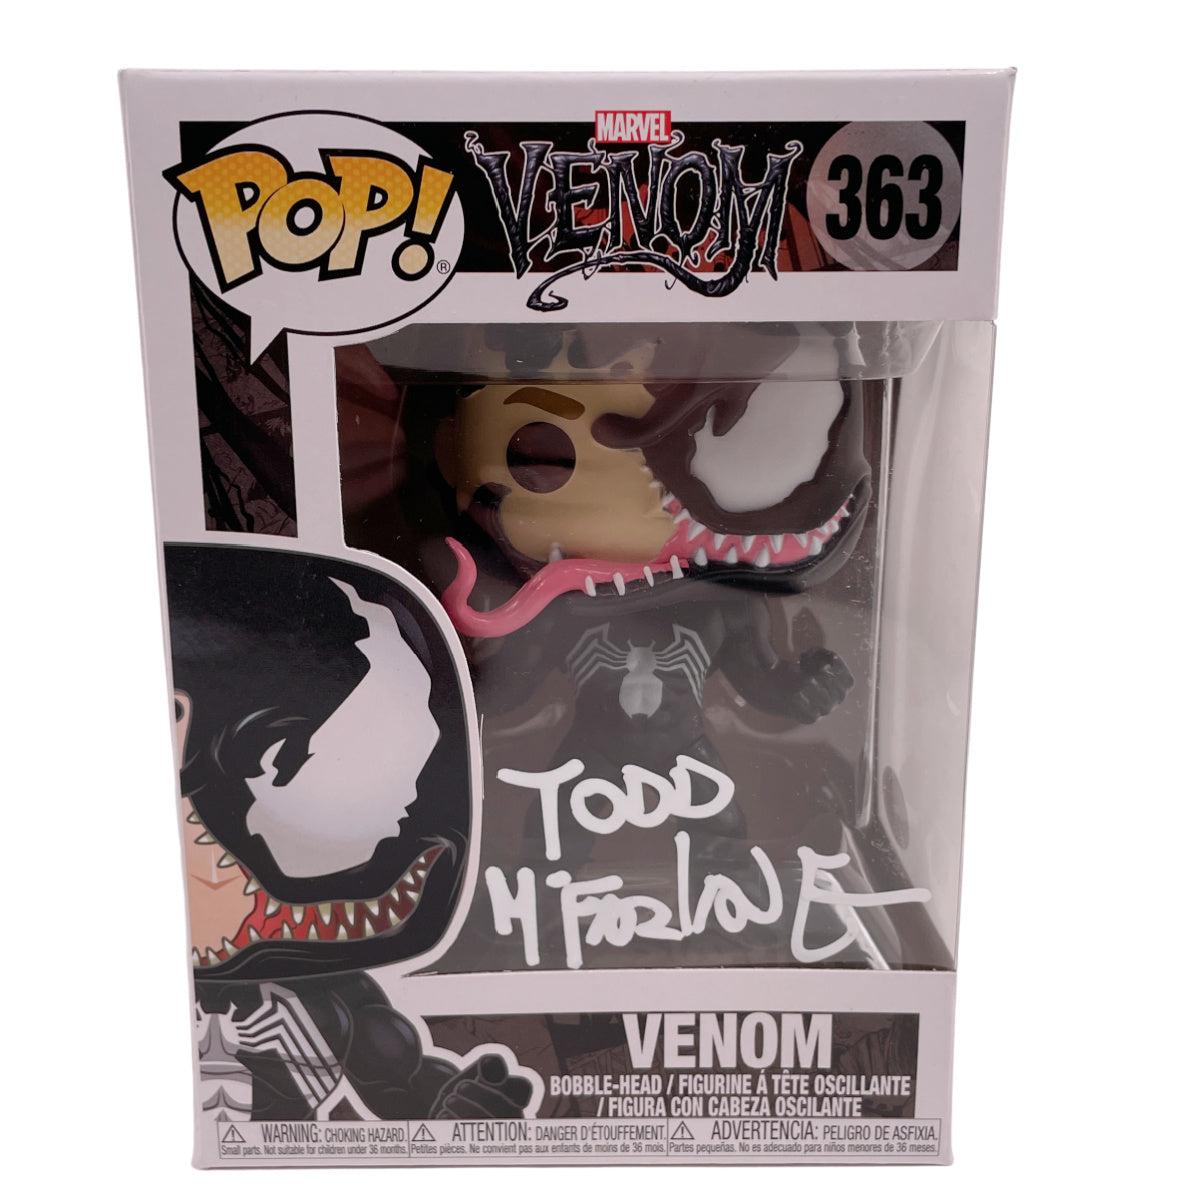 Todd McFarlane Signed Funko POP Venom #363 Autographed JSA COA